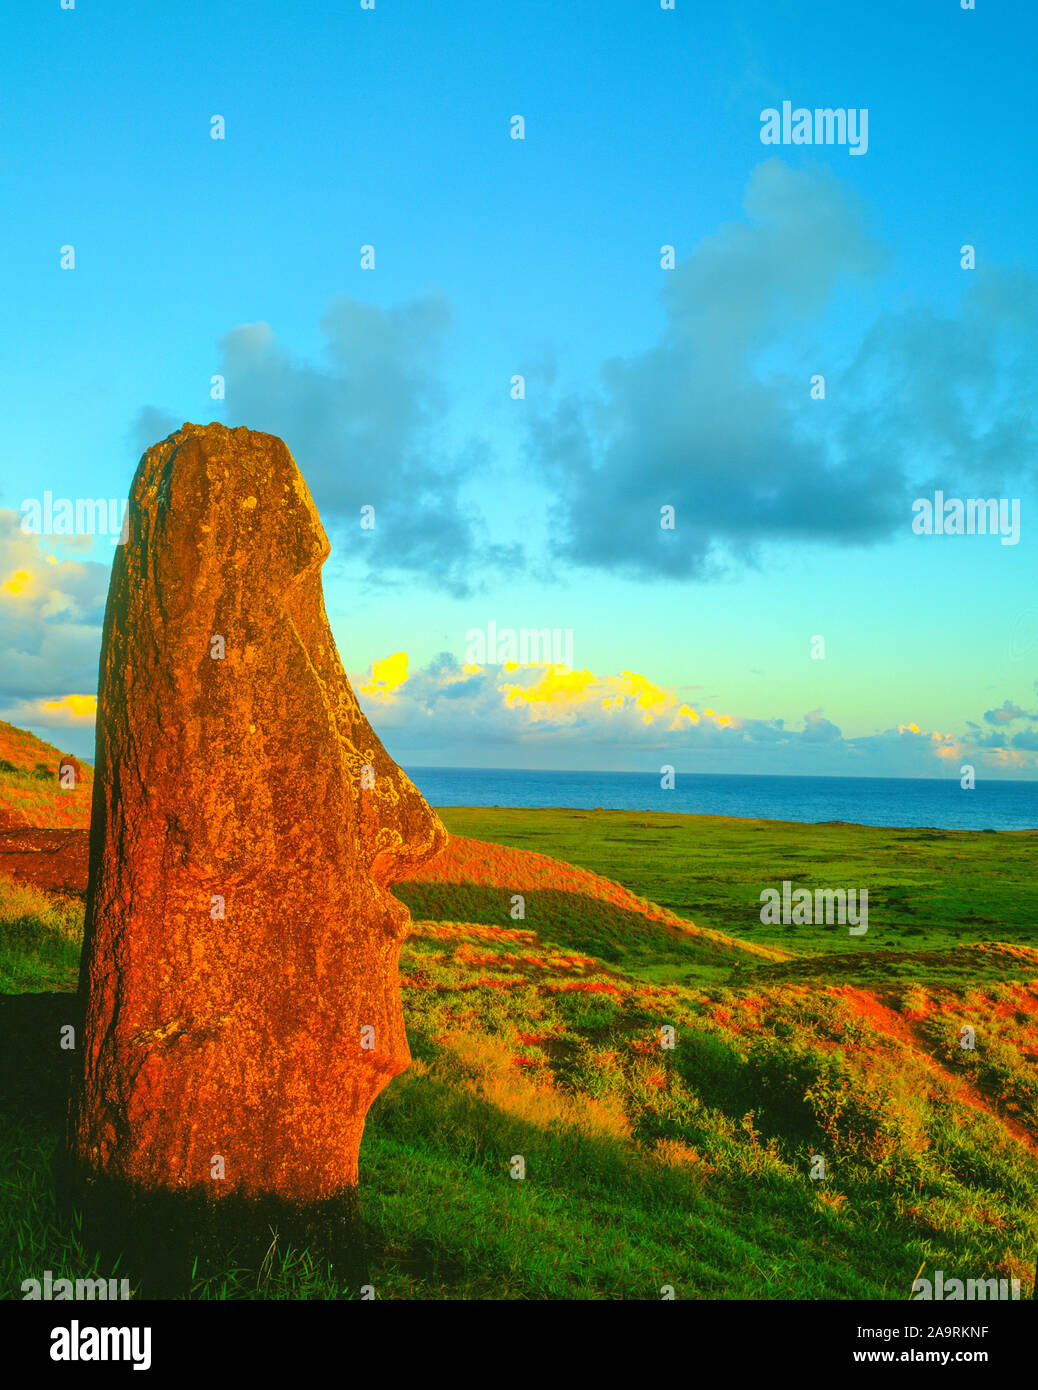 Moai statues at Rano Raraku, Easter Island, Chile Rapa Nui National Park, South Pacific Ocean Stock Photo